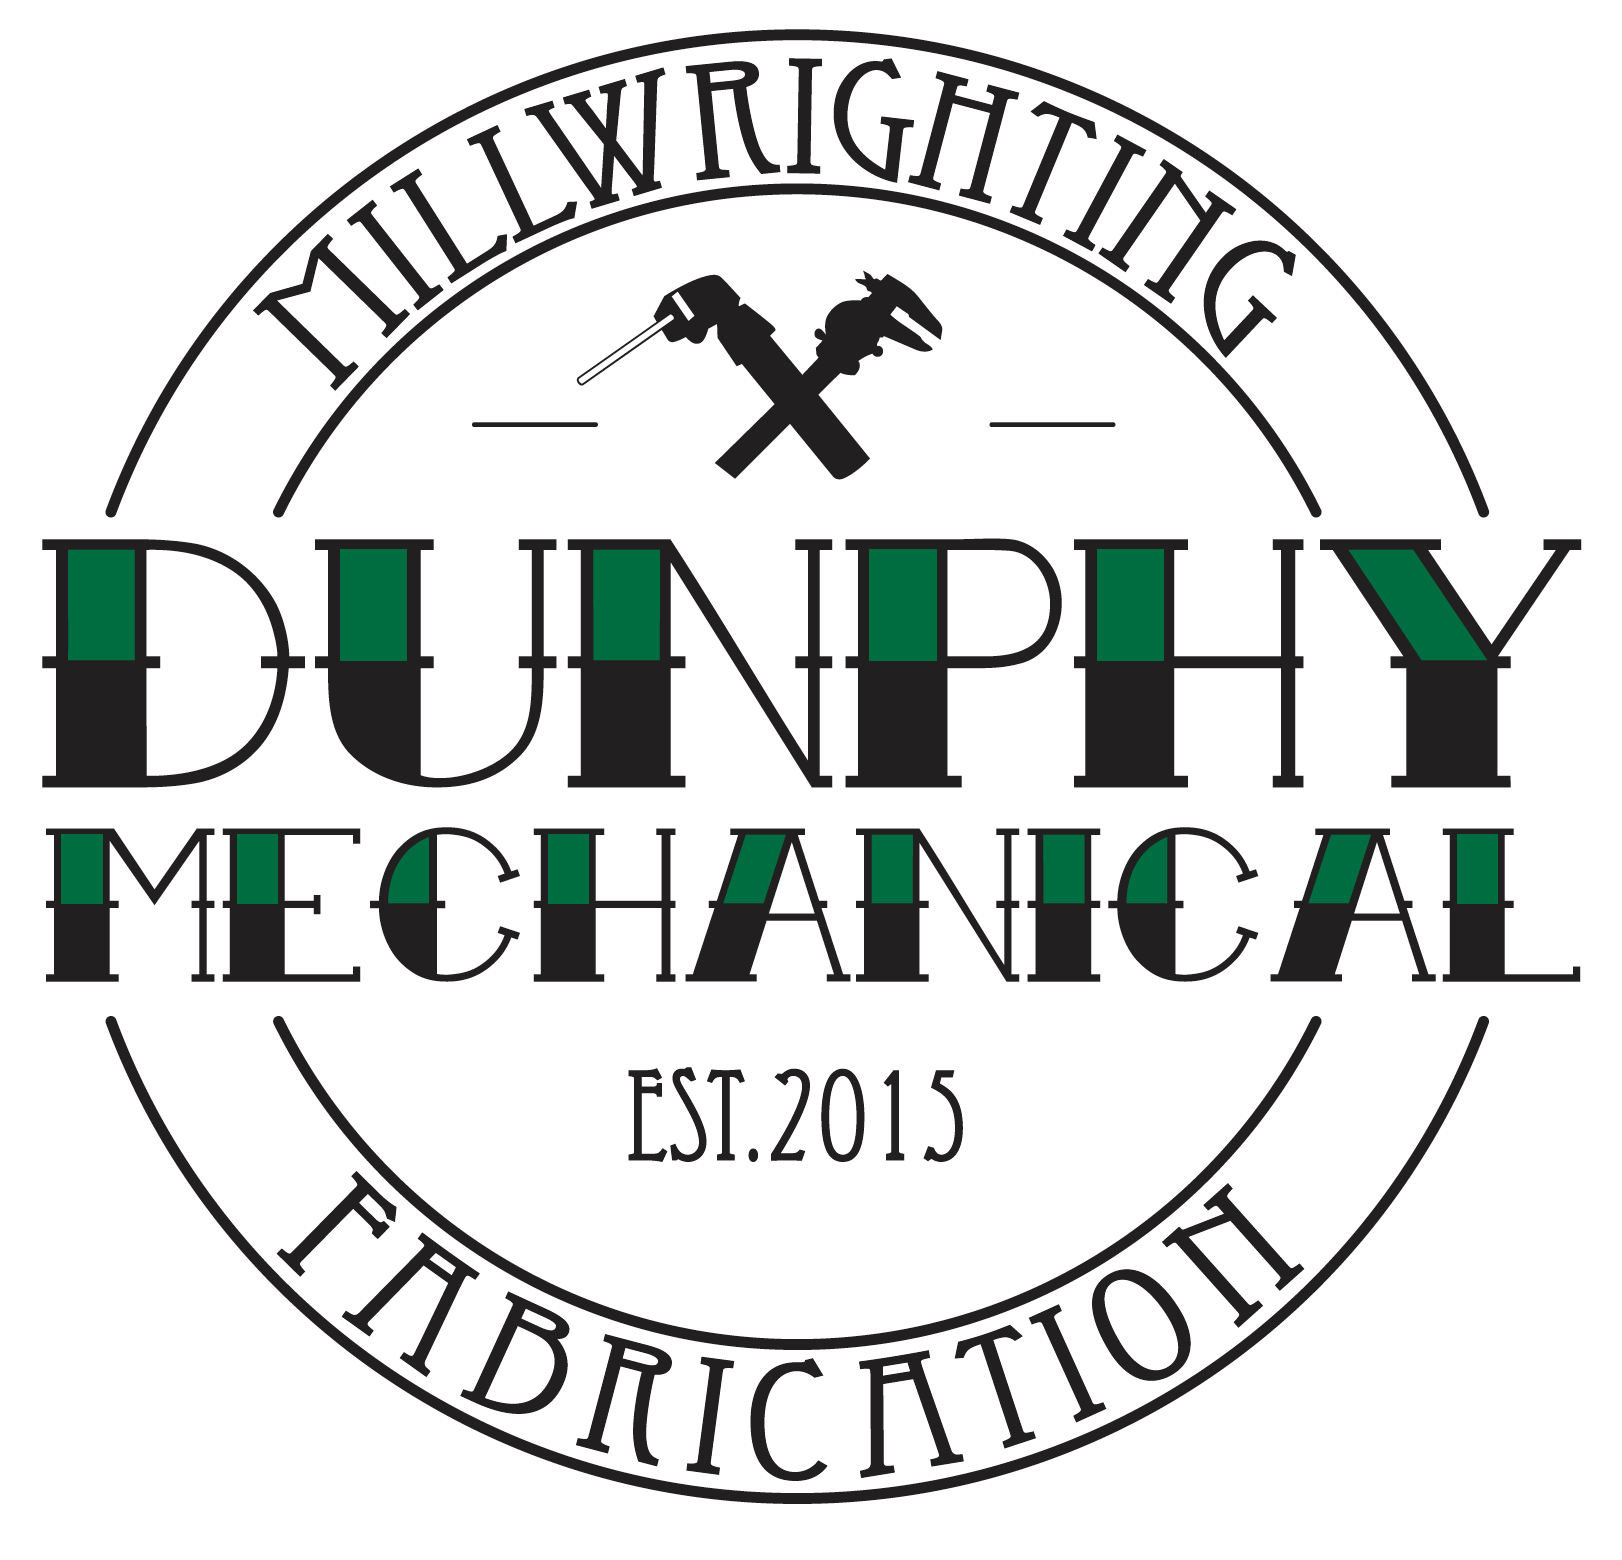 Dunphy Mechanical Fabrication